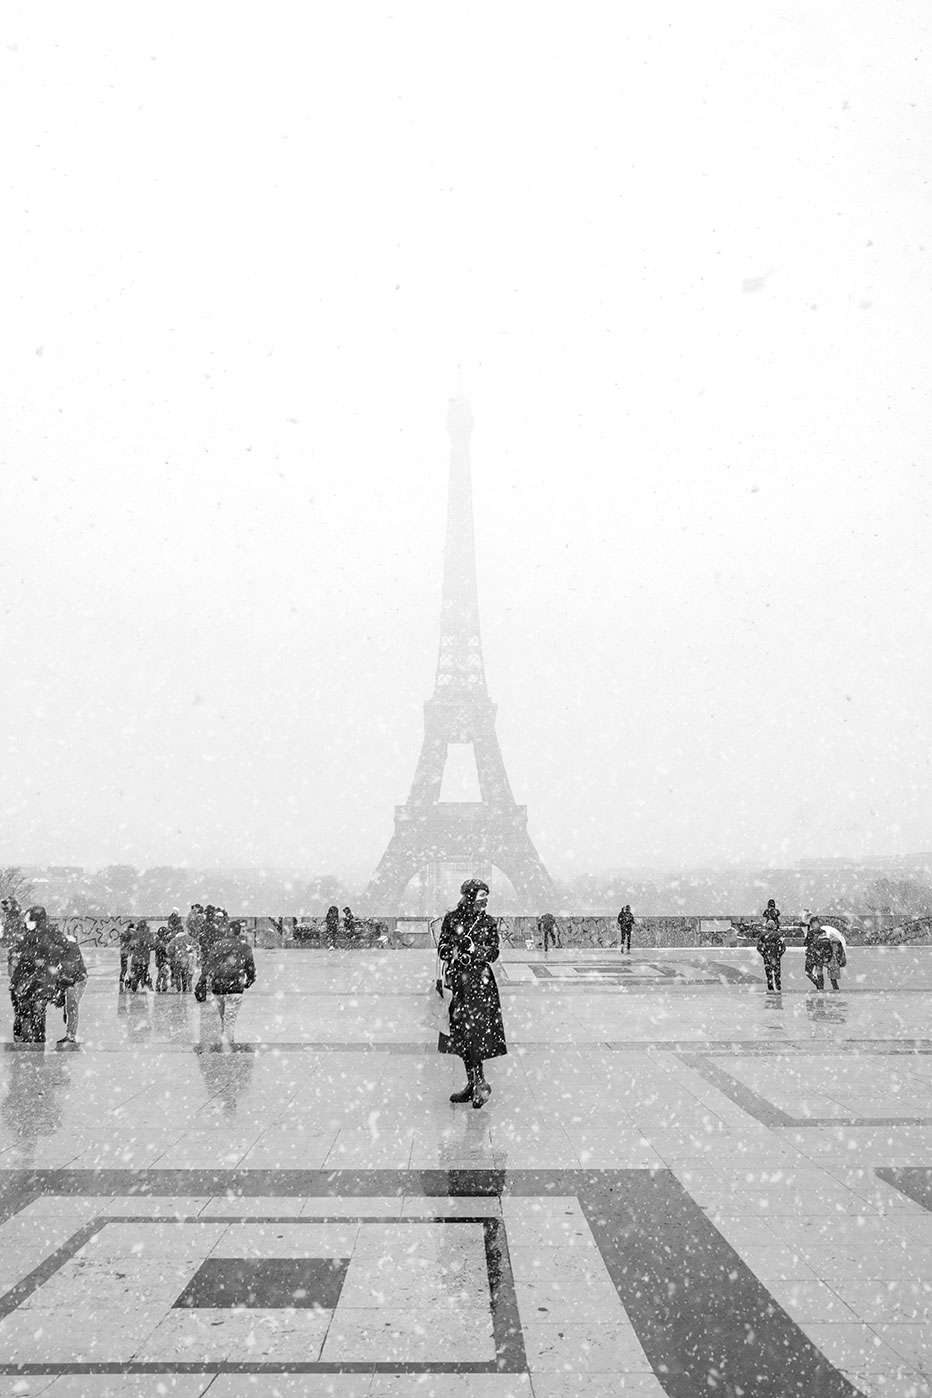 The Eiffel Tower under snowfall, Place du Trocadéro, Paris, France 2021 (Nos Dren).